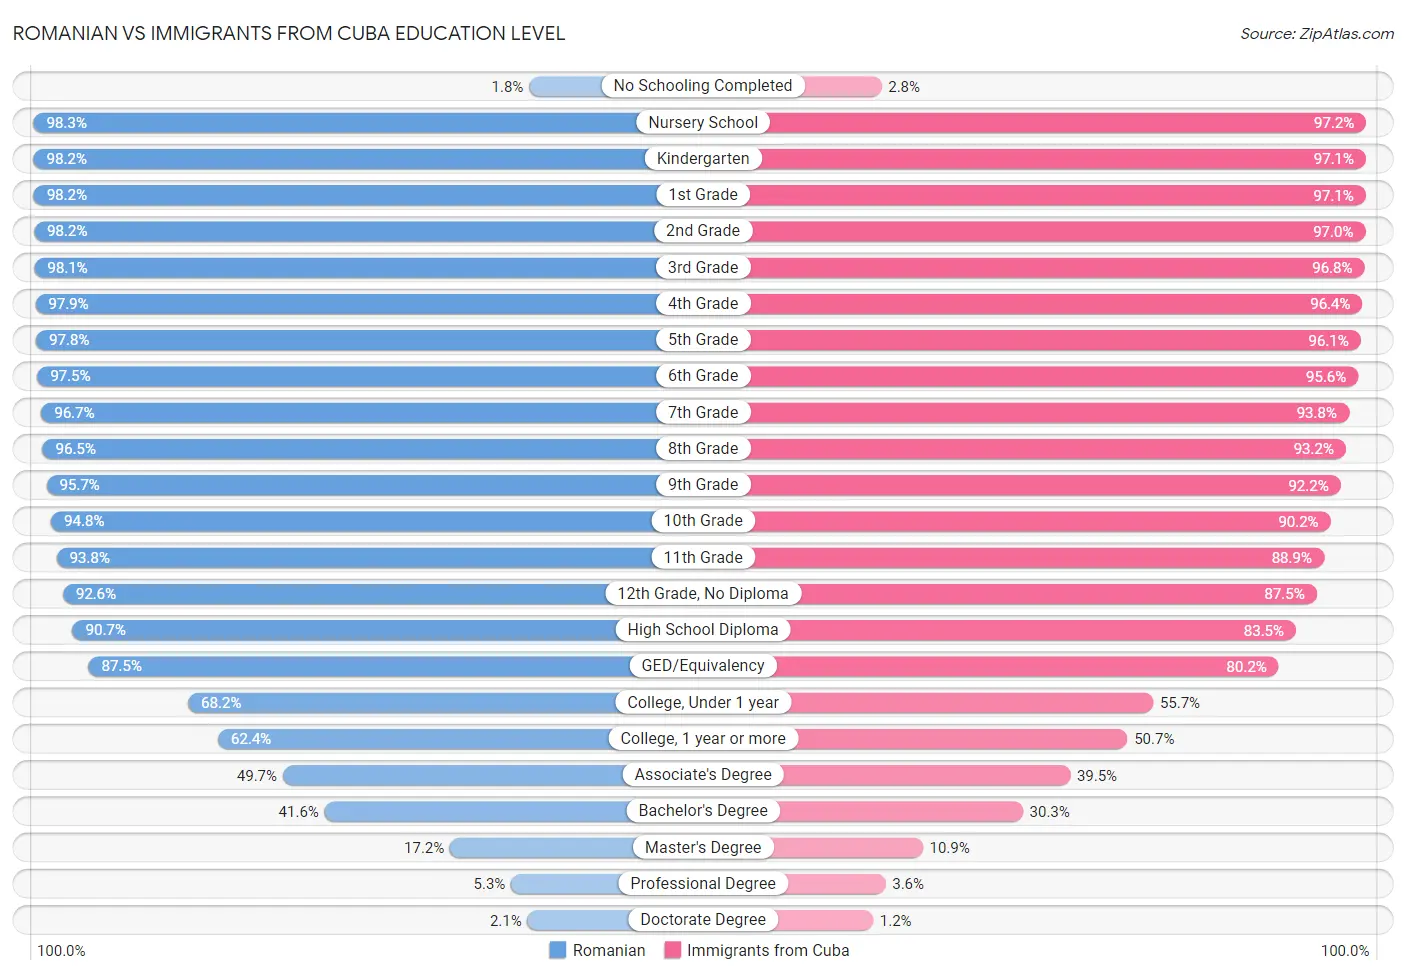 Romanian vs Immigrants from Cuba Education Level